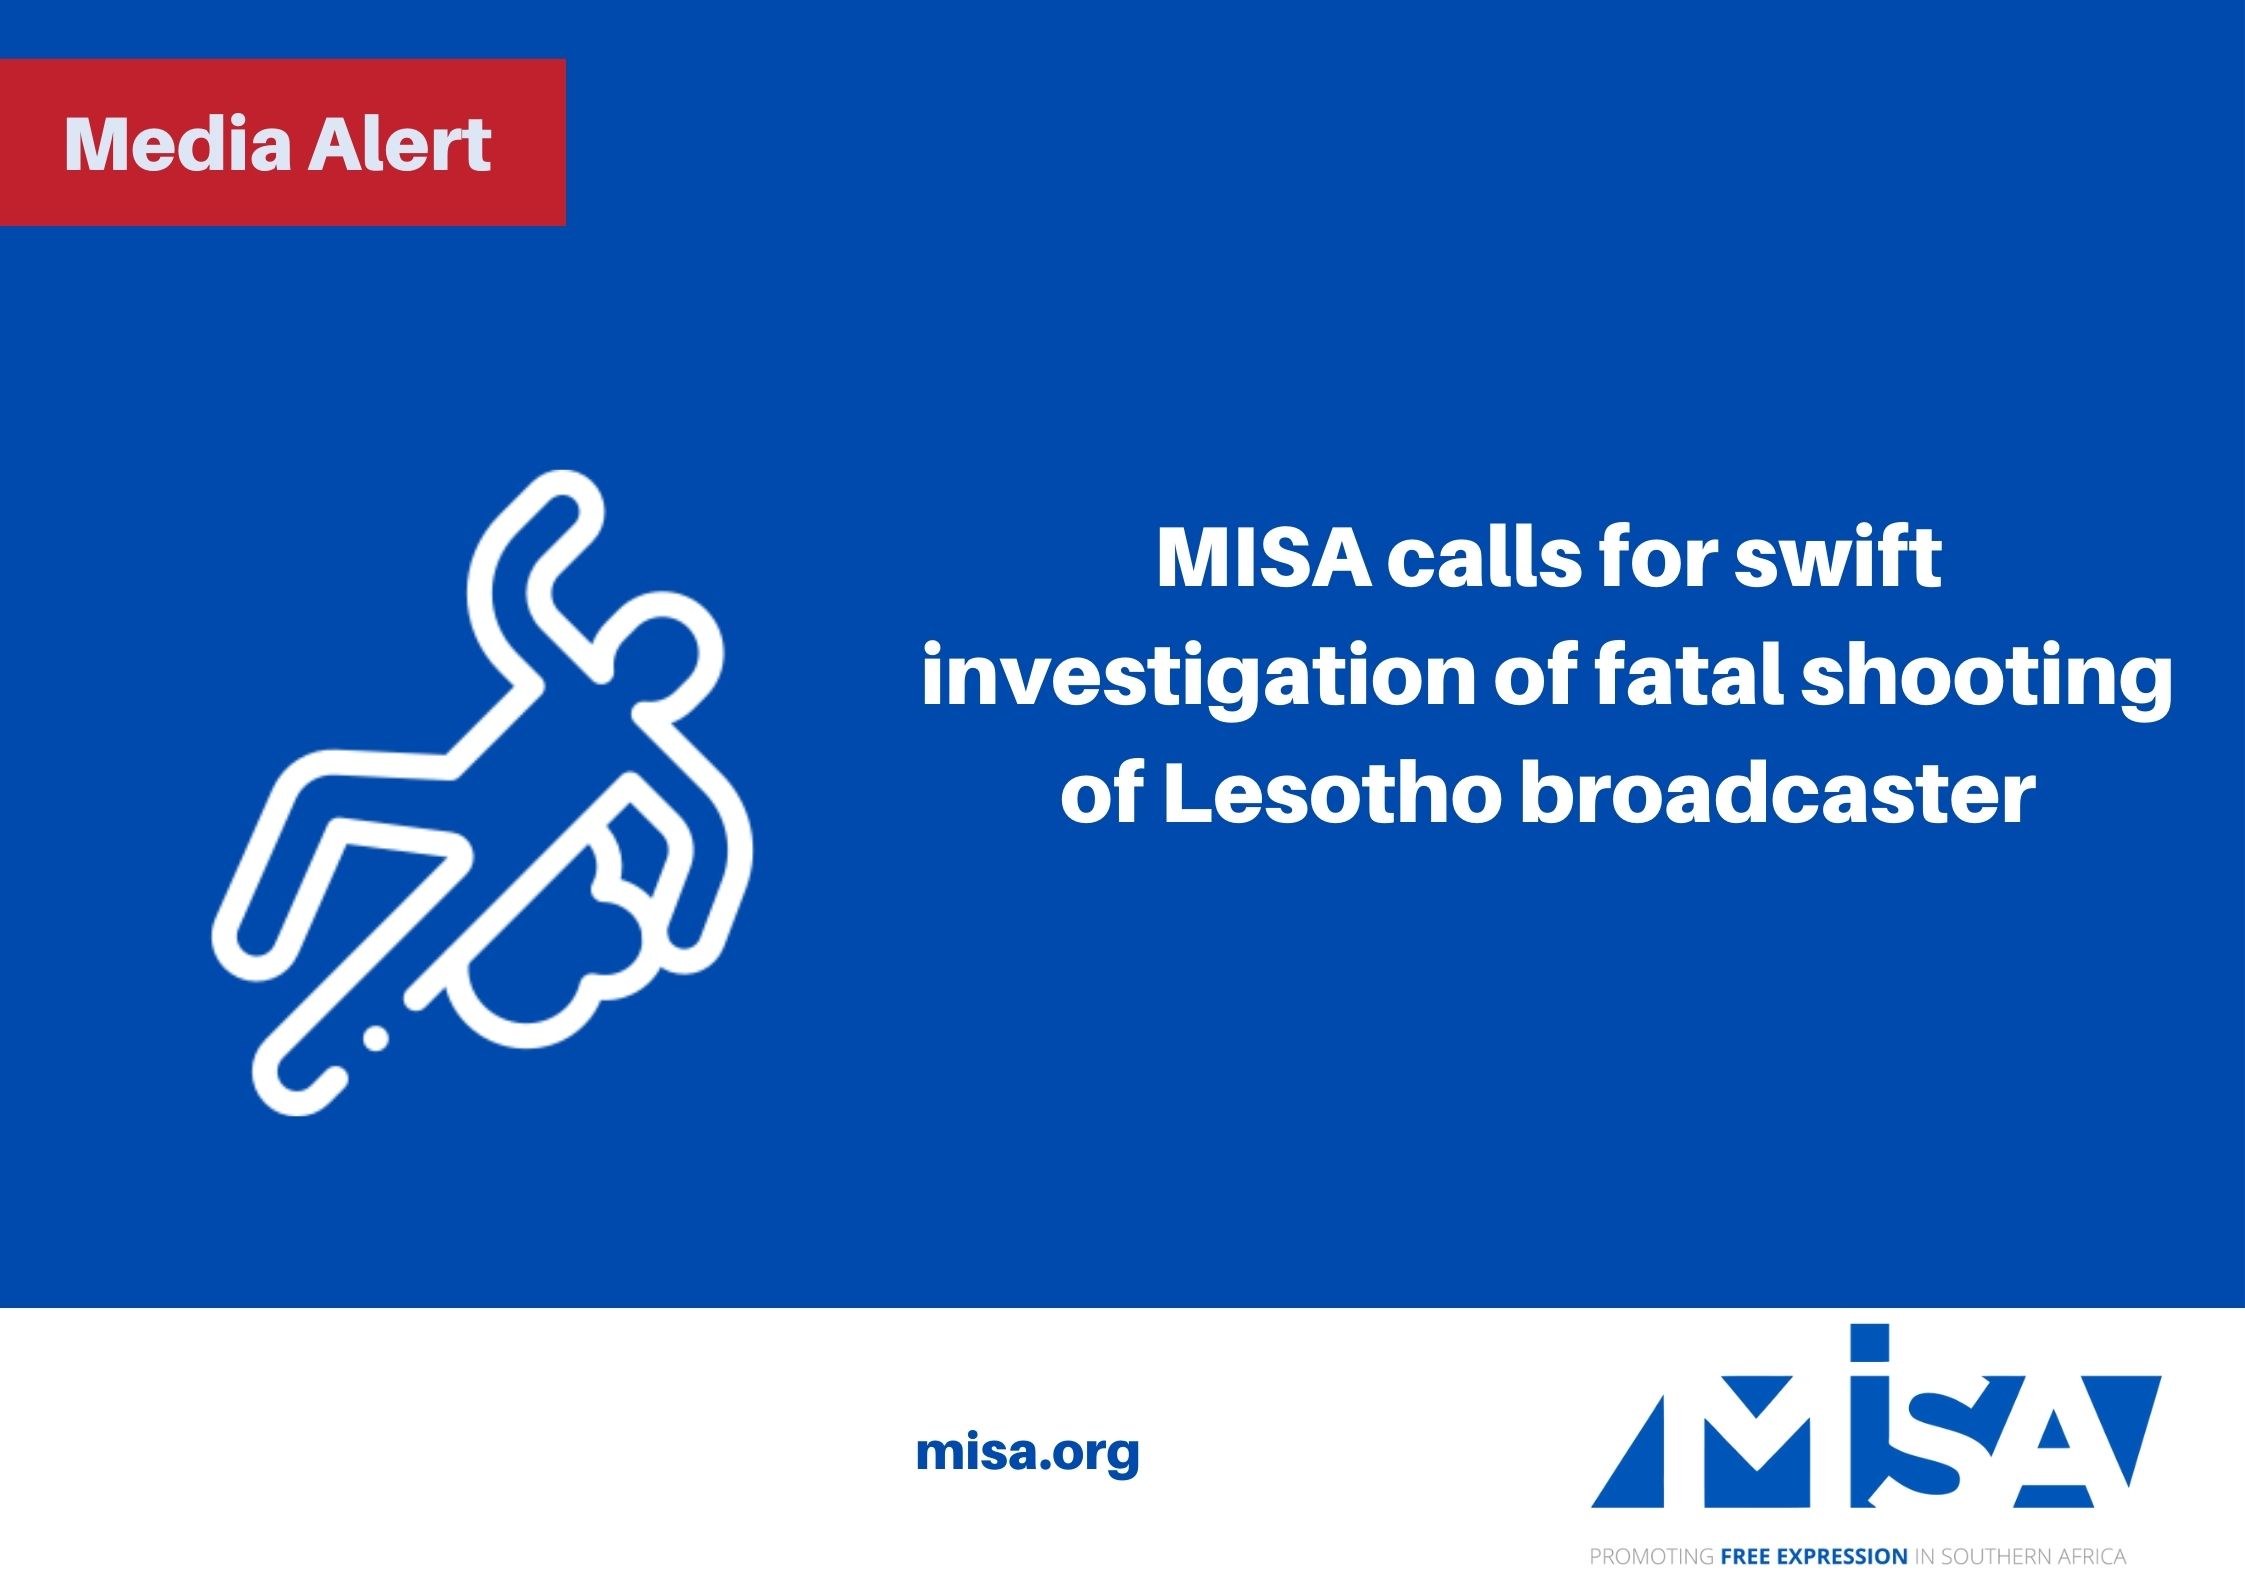 MISA calls for swift investigation of fatal shooting of Lesotho broadcaster